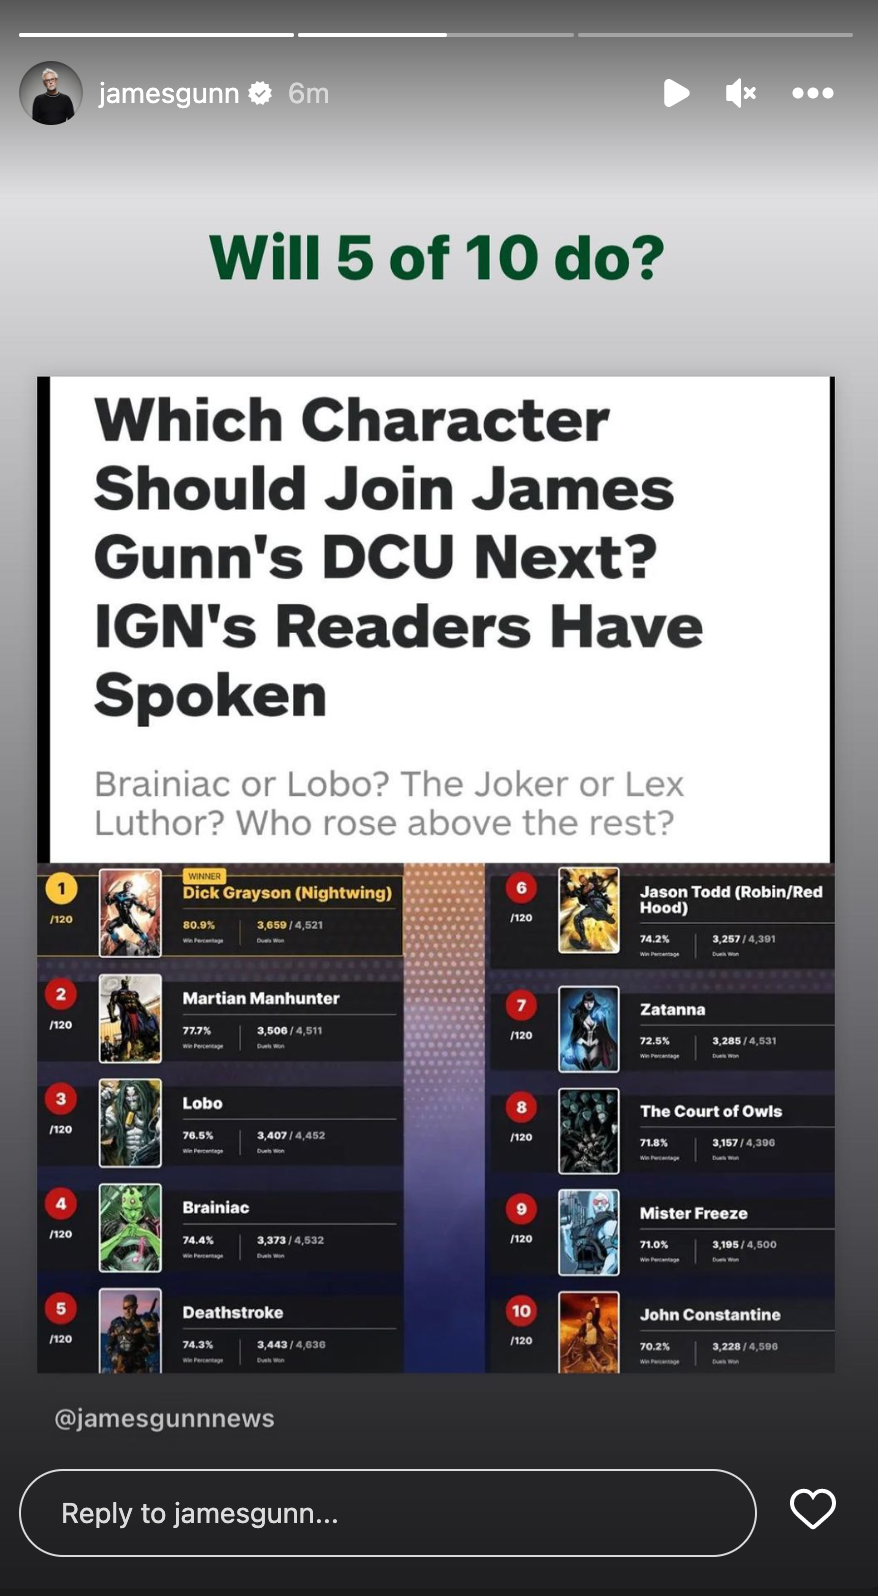 james-gunn-dc-universe-characters-poll.png